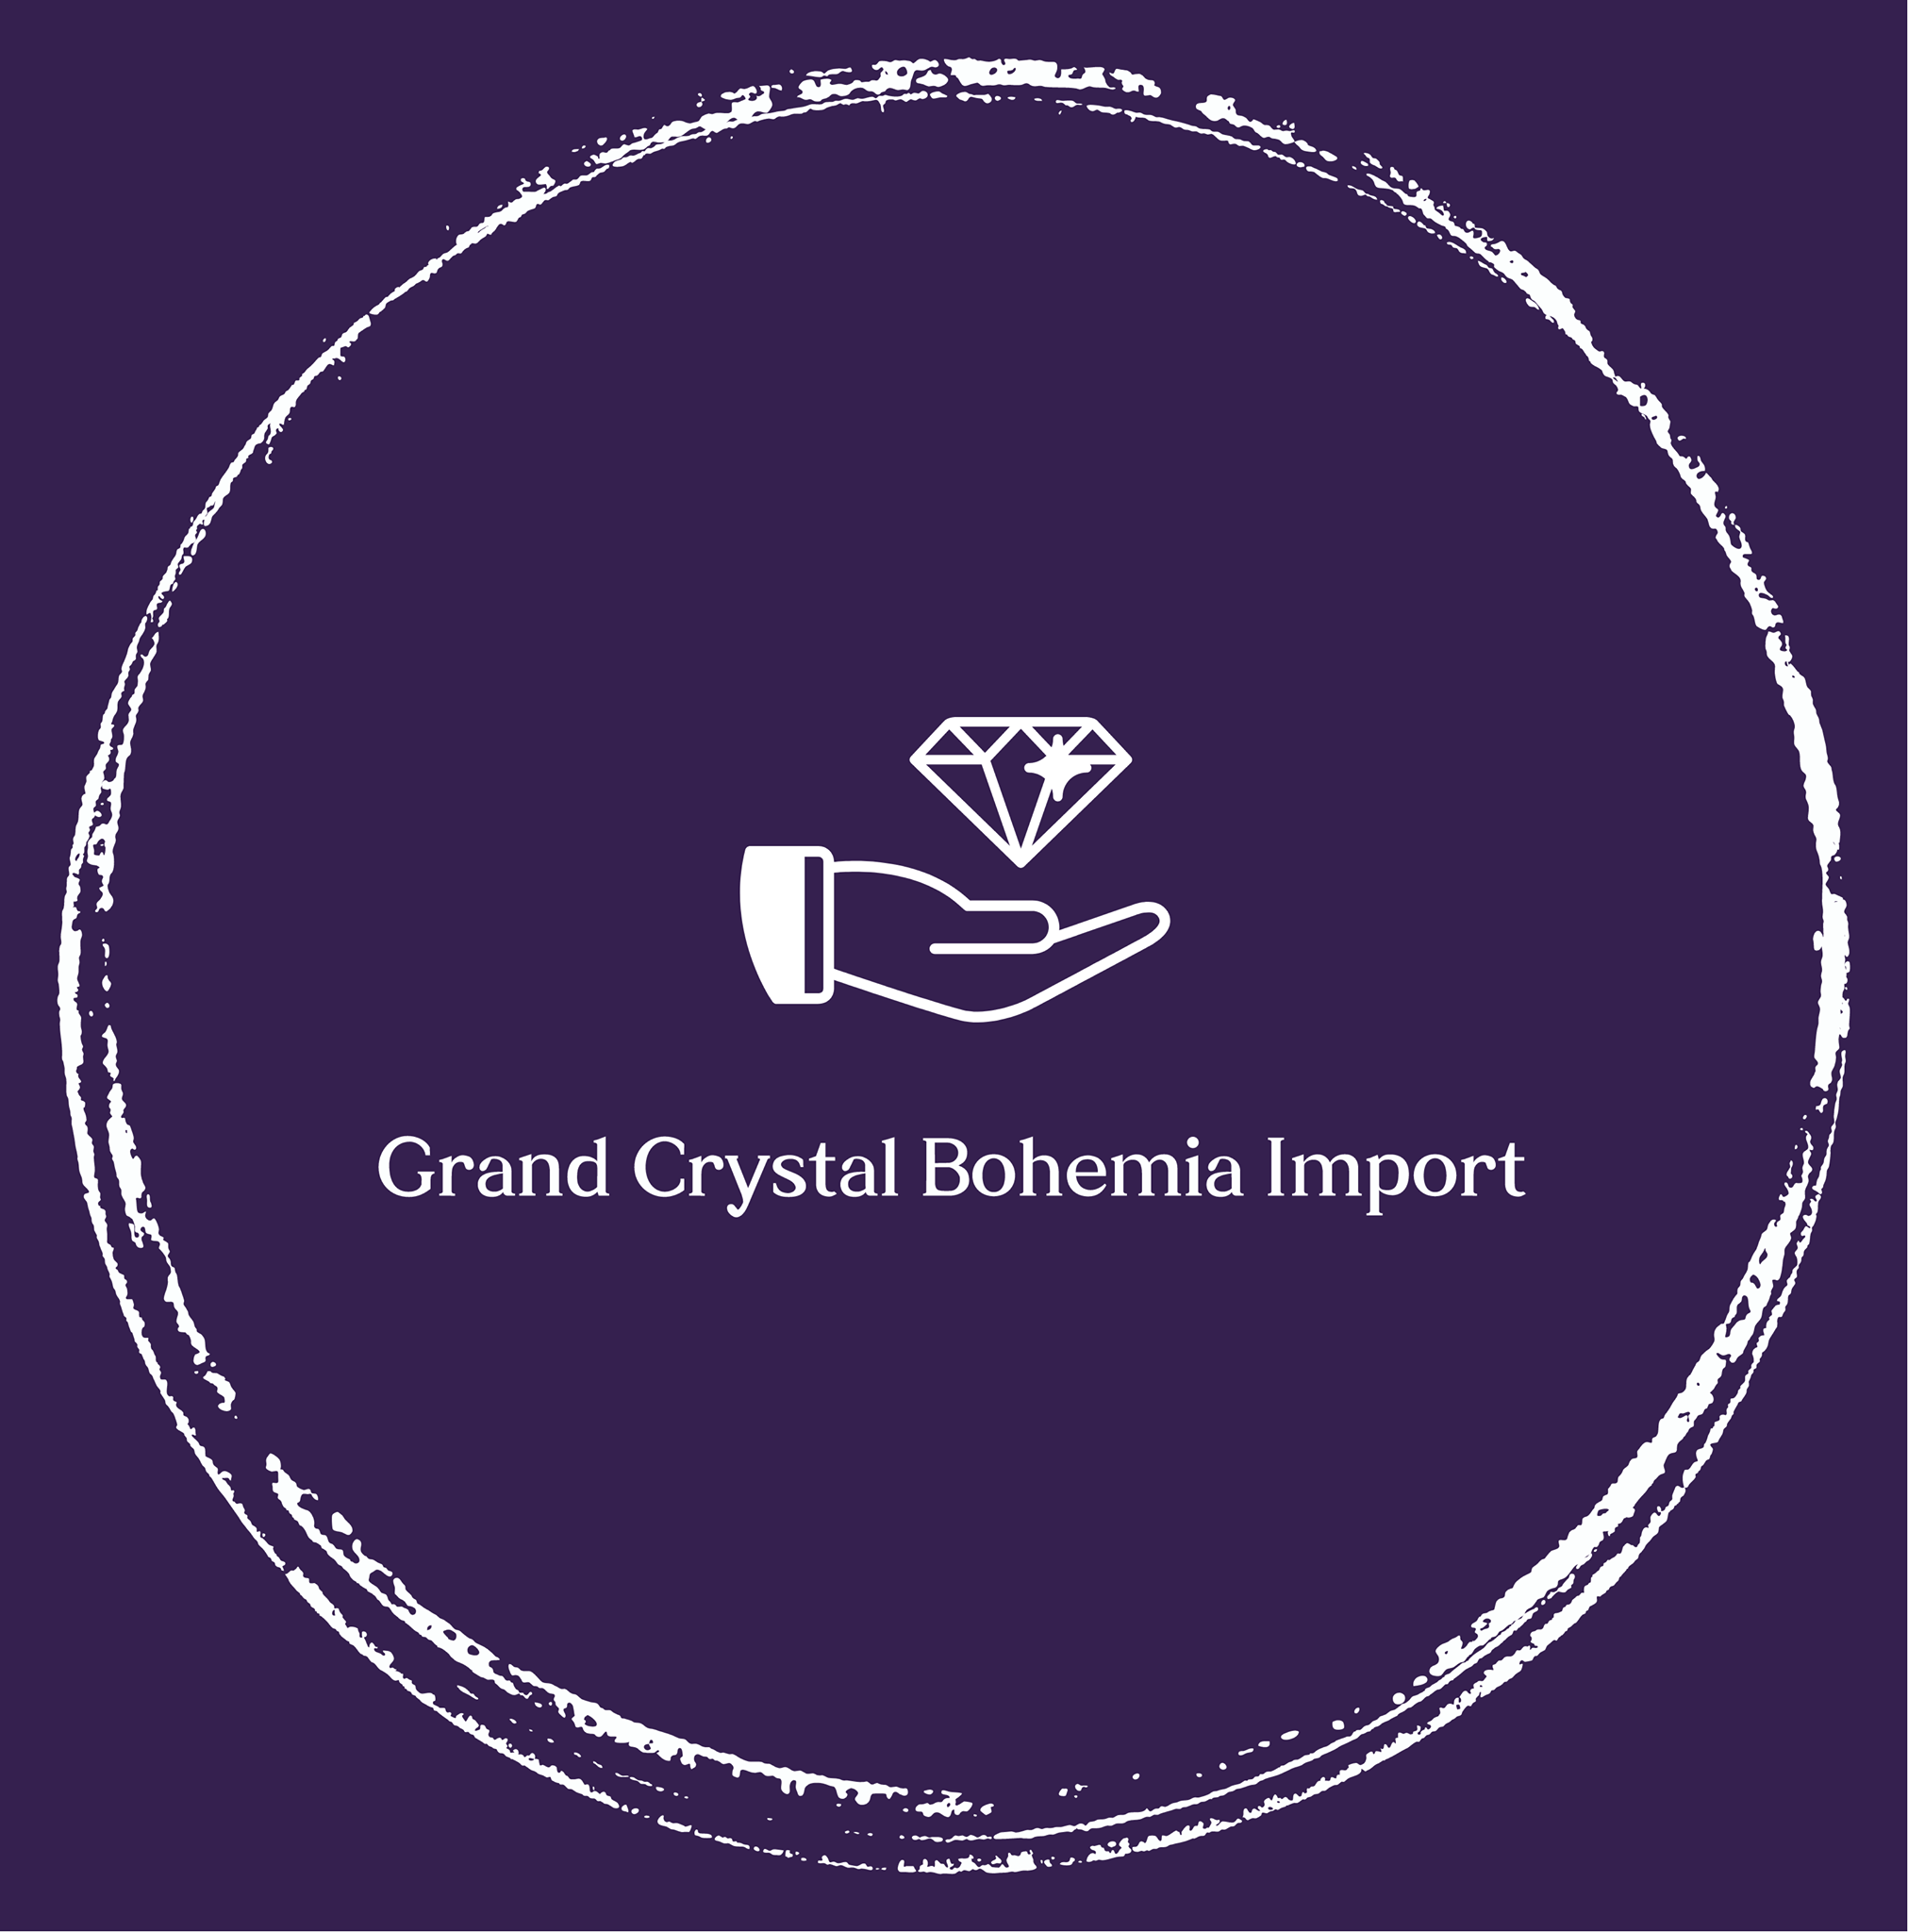 Grand Crystal Bohemia Import